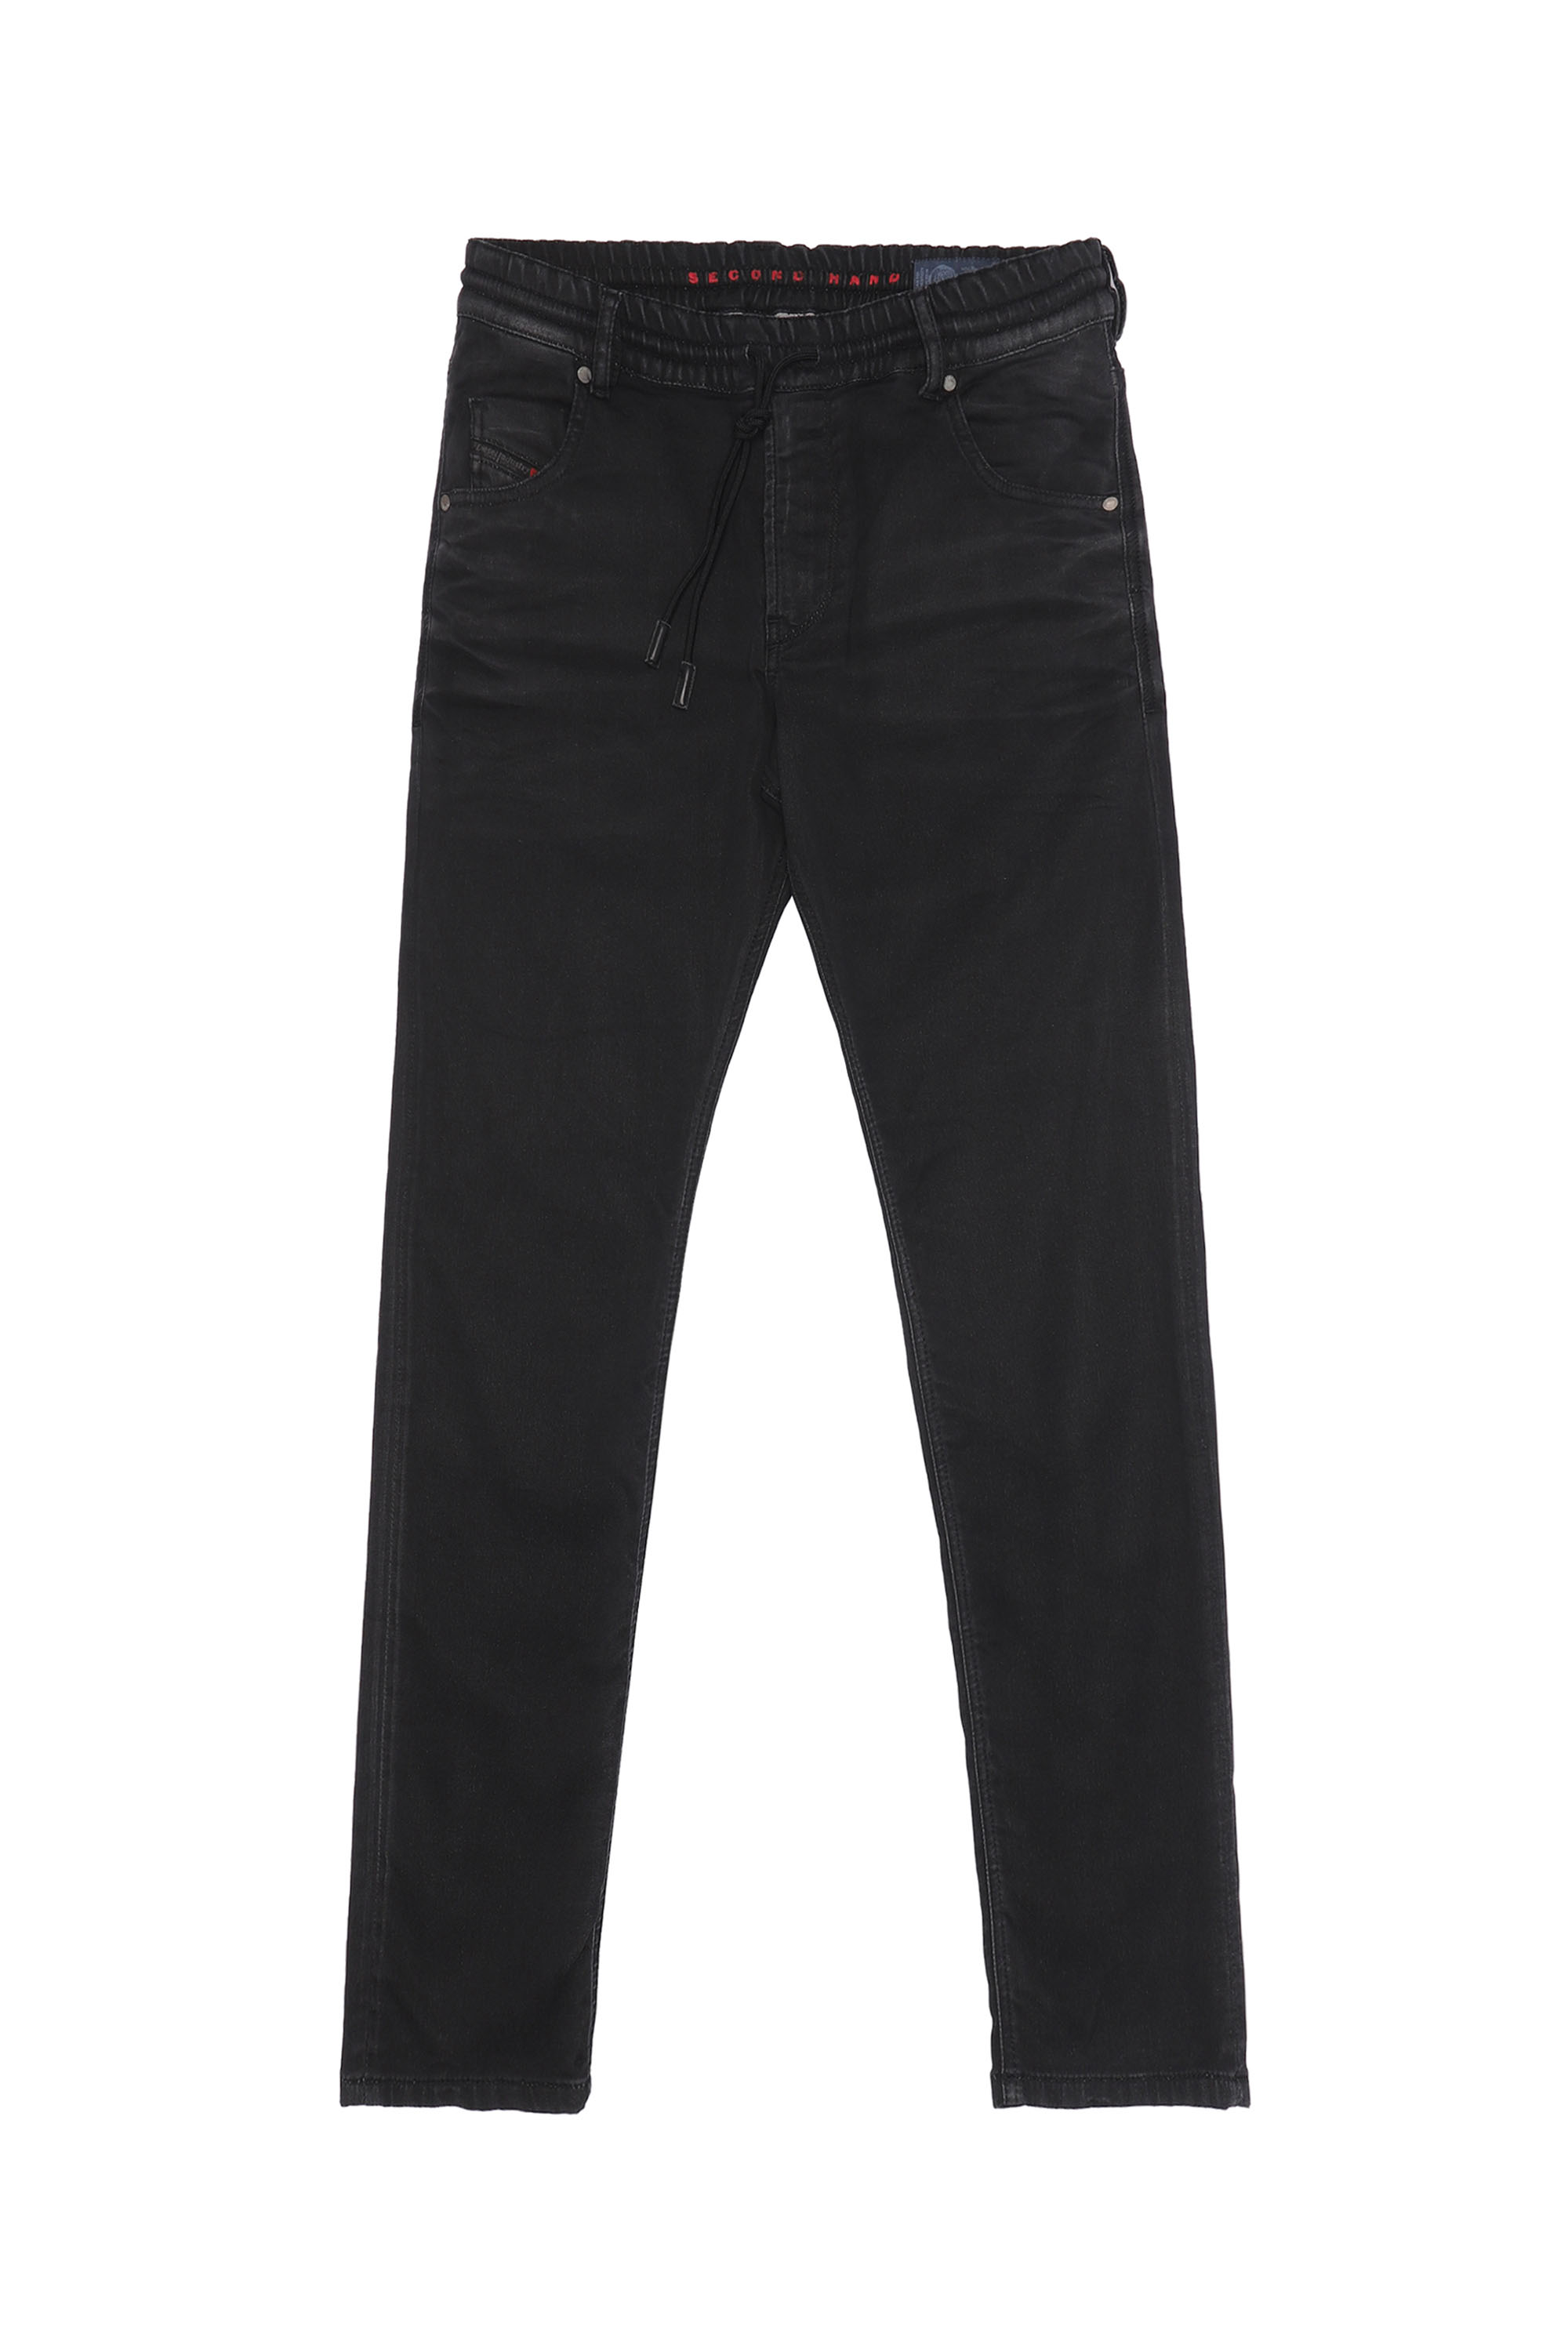 KRAILEY JoggJeans®, Black/Dark grey - Jeans